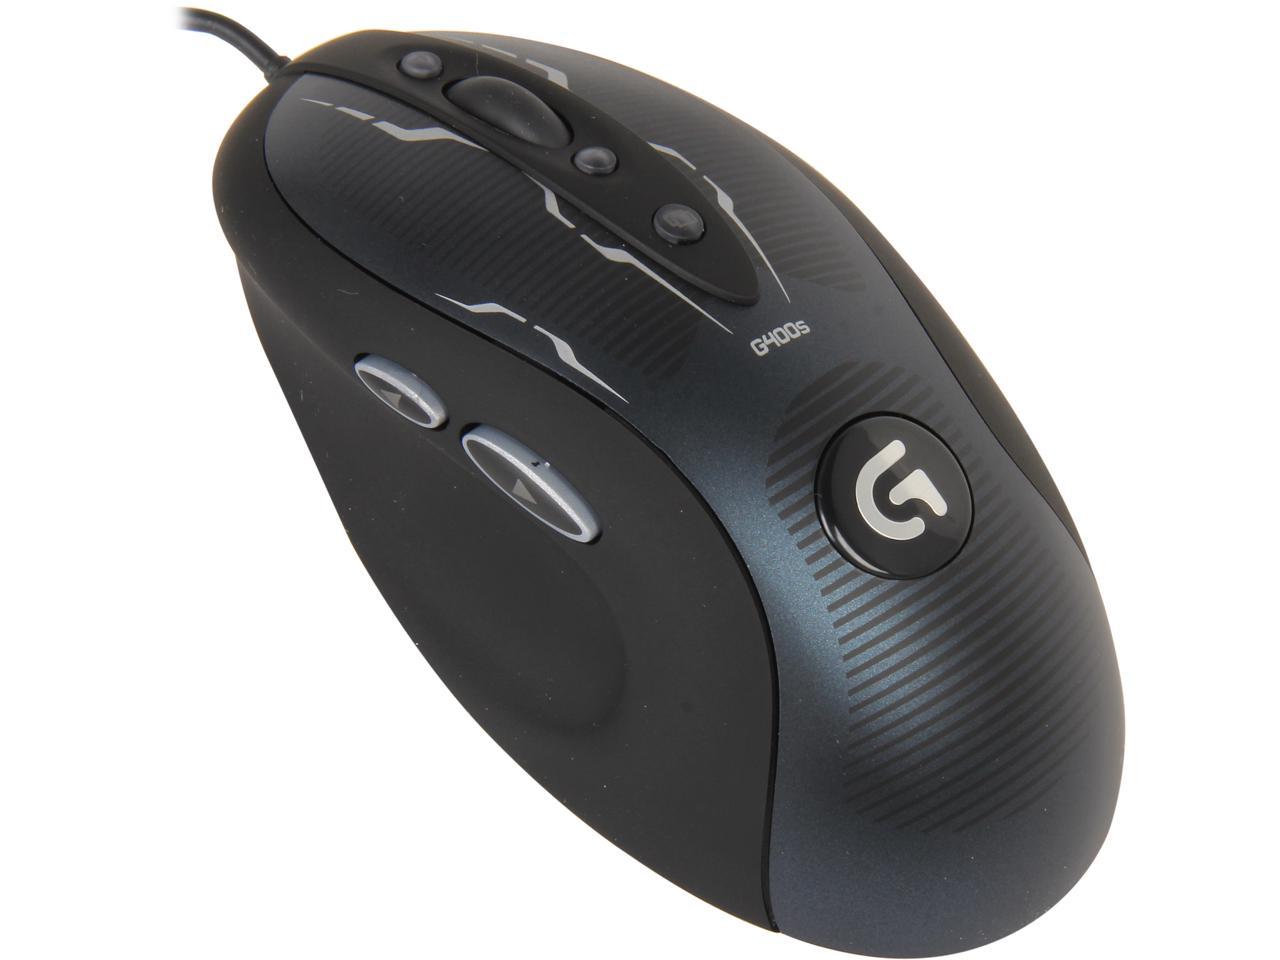 Logitech G400s 910-003589 Black Wired Optical Mouse - Newegg.com